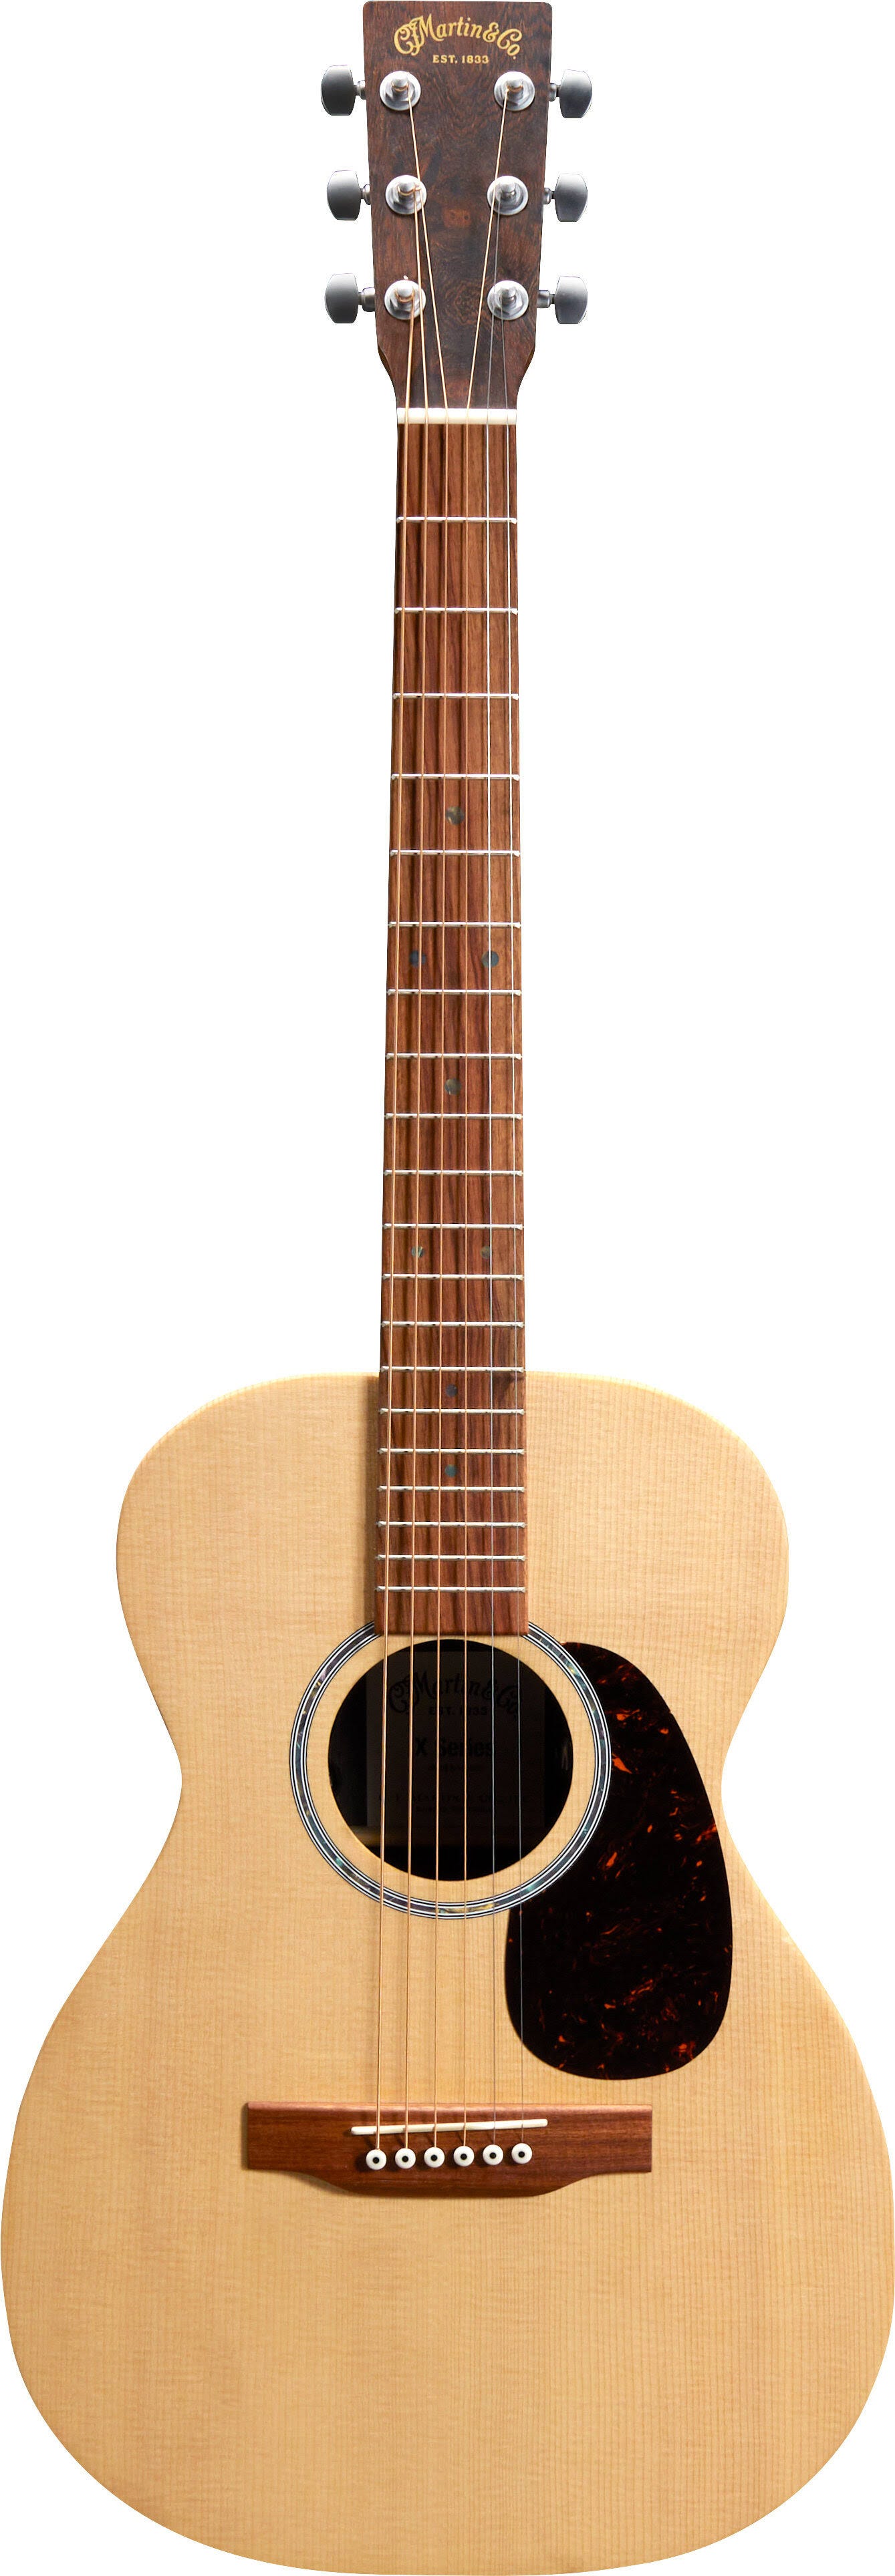 Martin 0-X2E Acoustic-Electric Guitar: Cocobolo Wood Natural Finish | Image